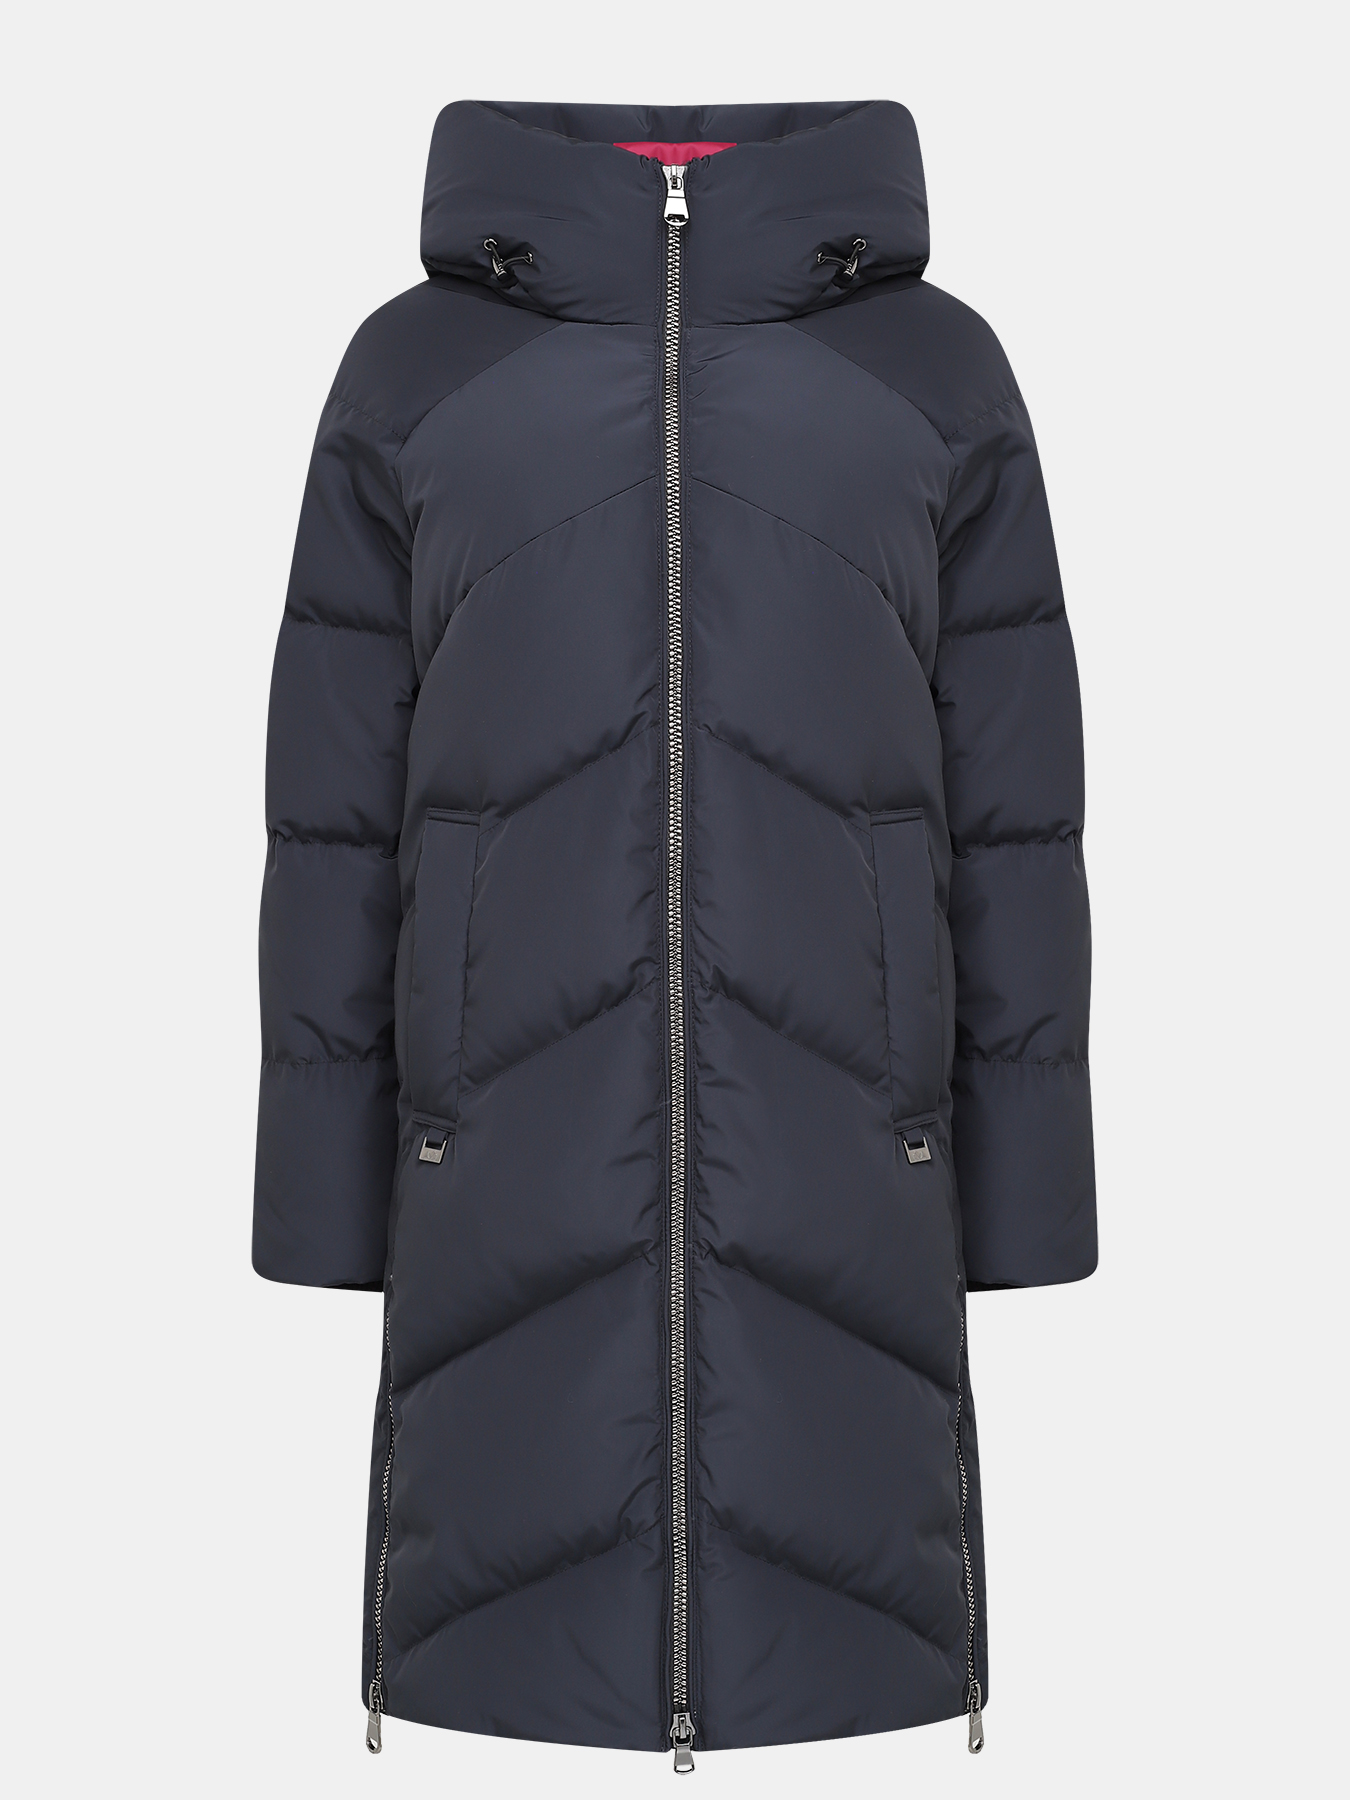 Пальто зимнее AVI 433610-022, цвет темно-синий, размер 48